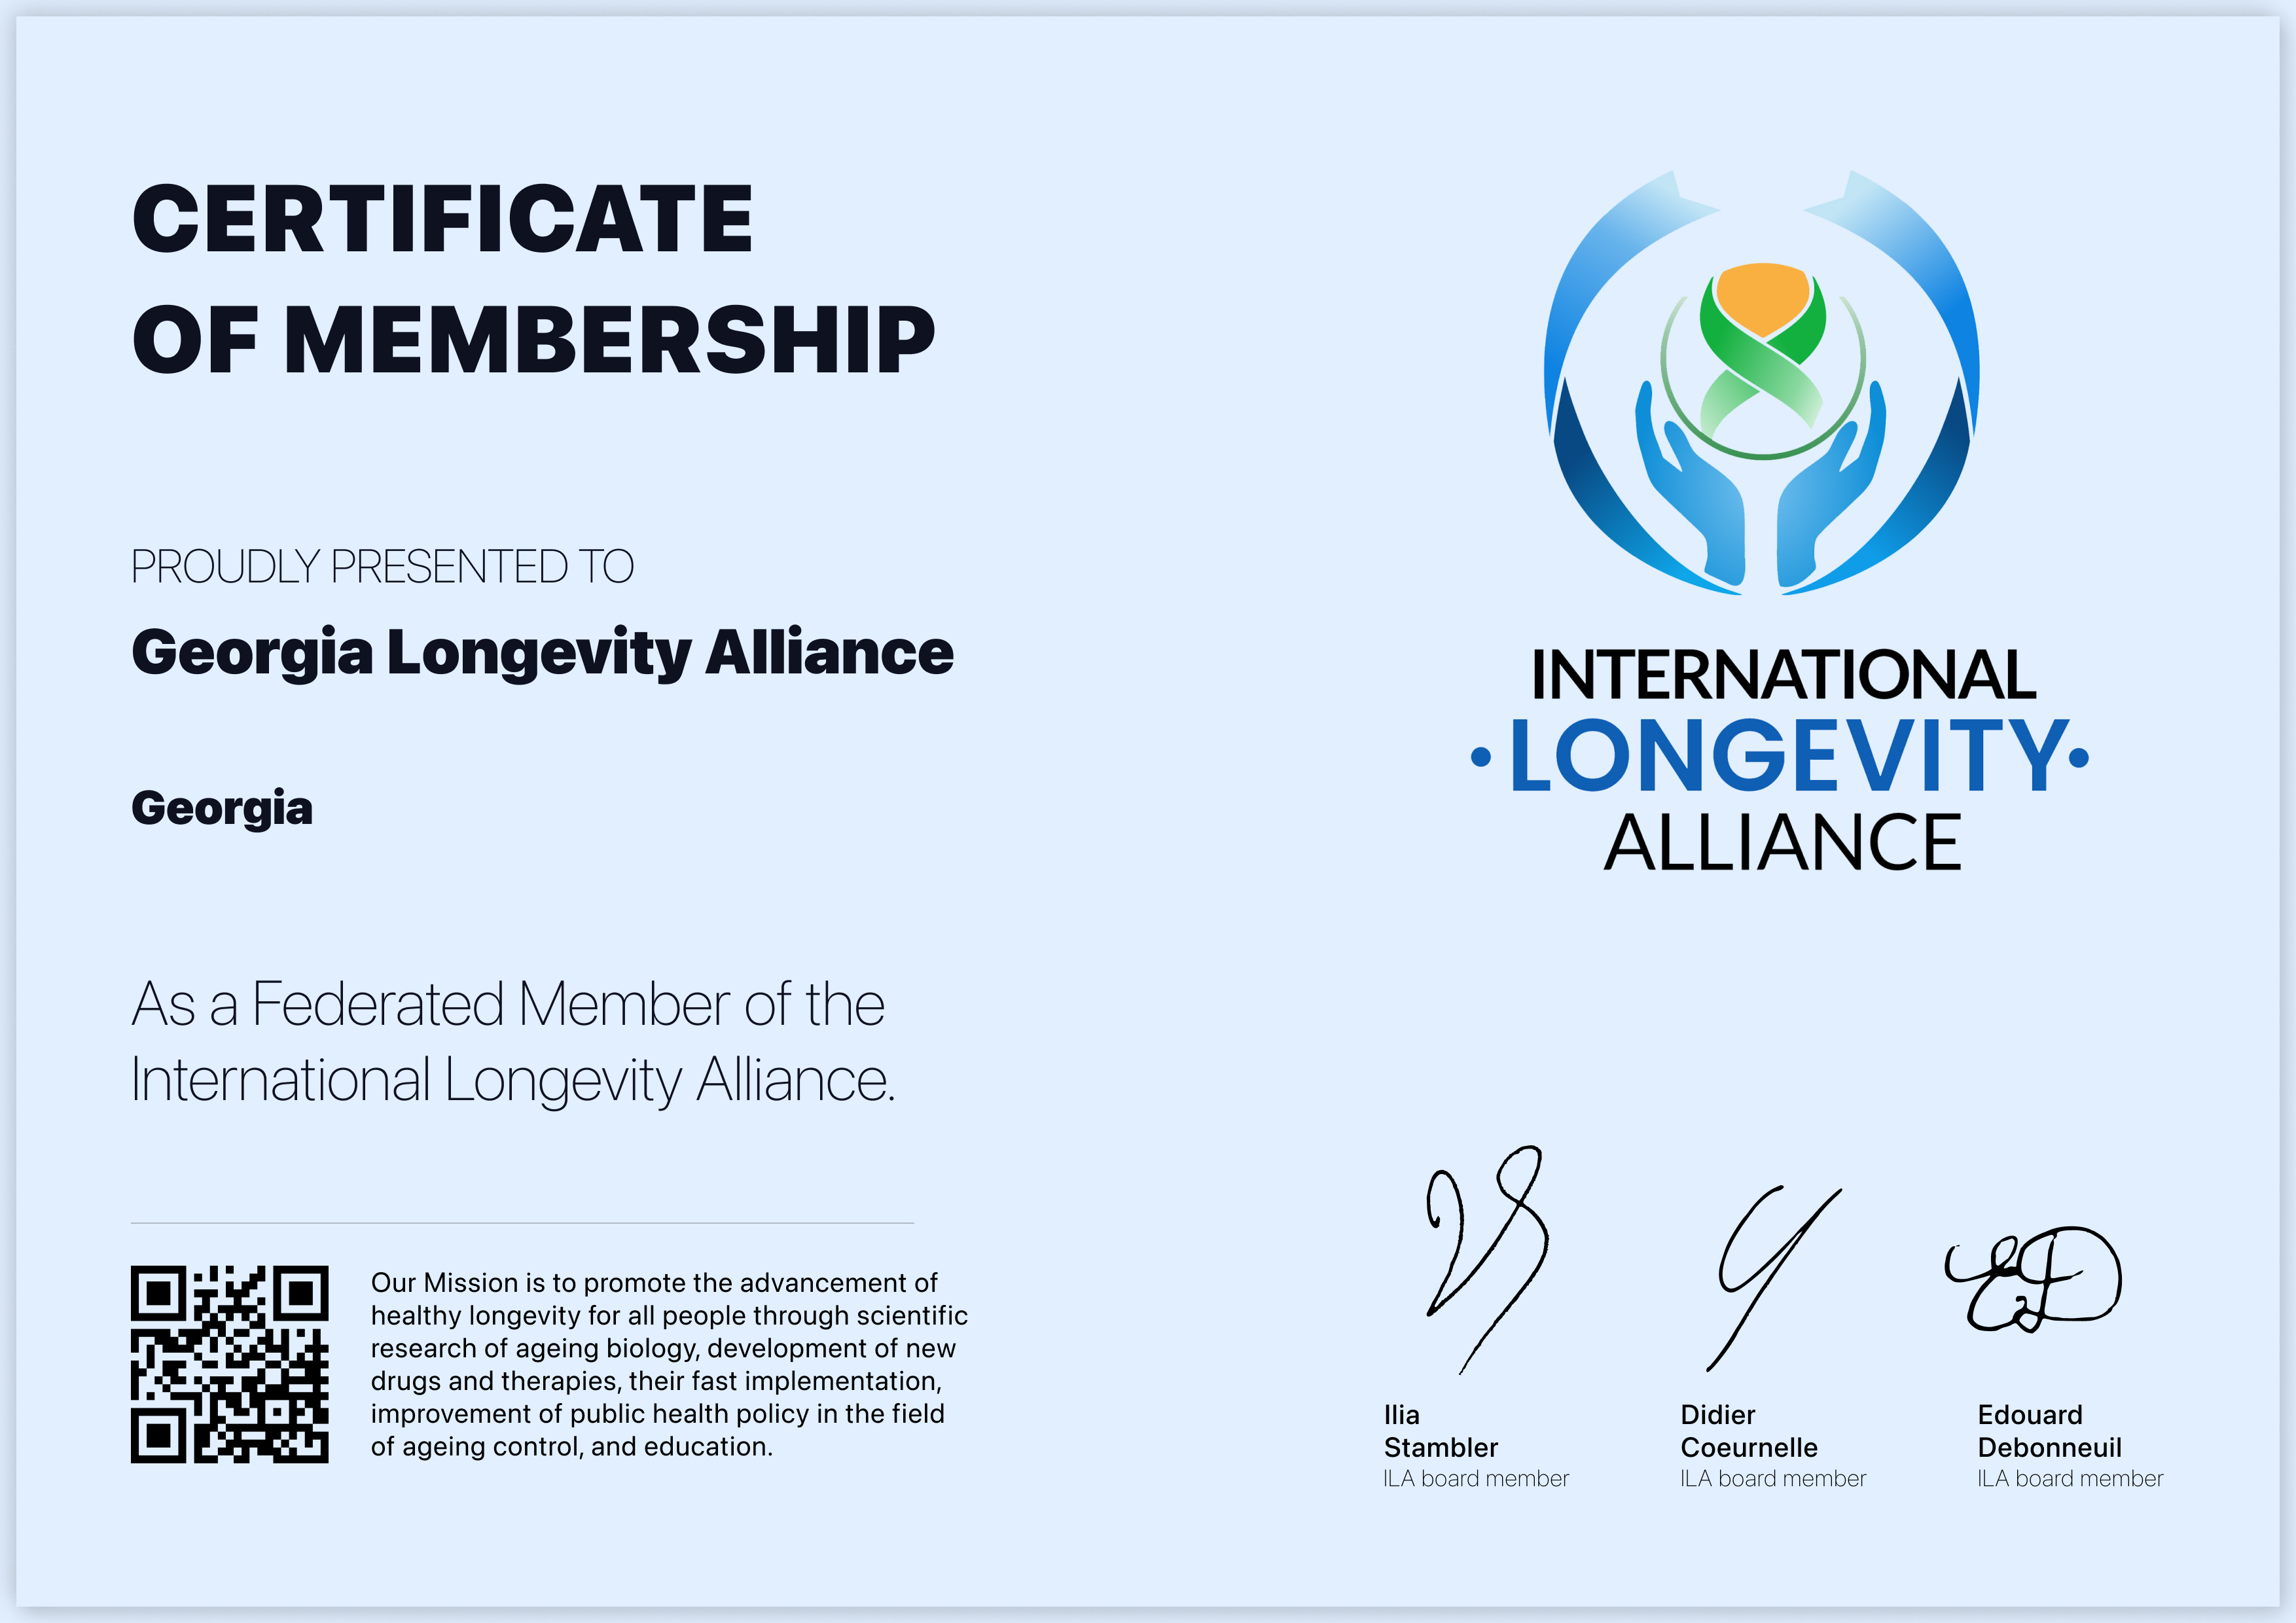 Federated Member of the International Longevity Alliance.